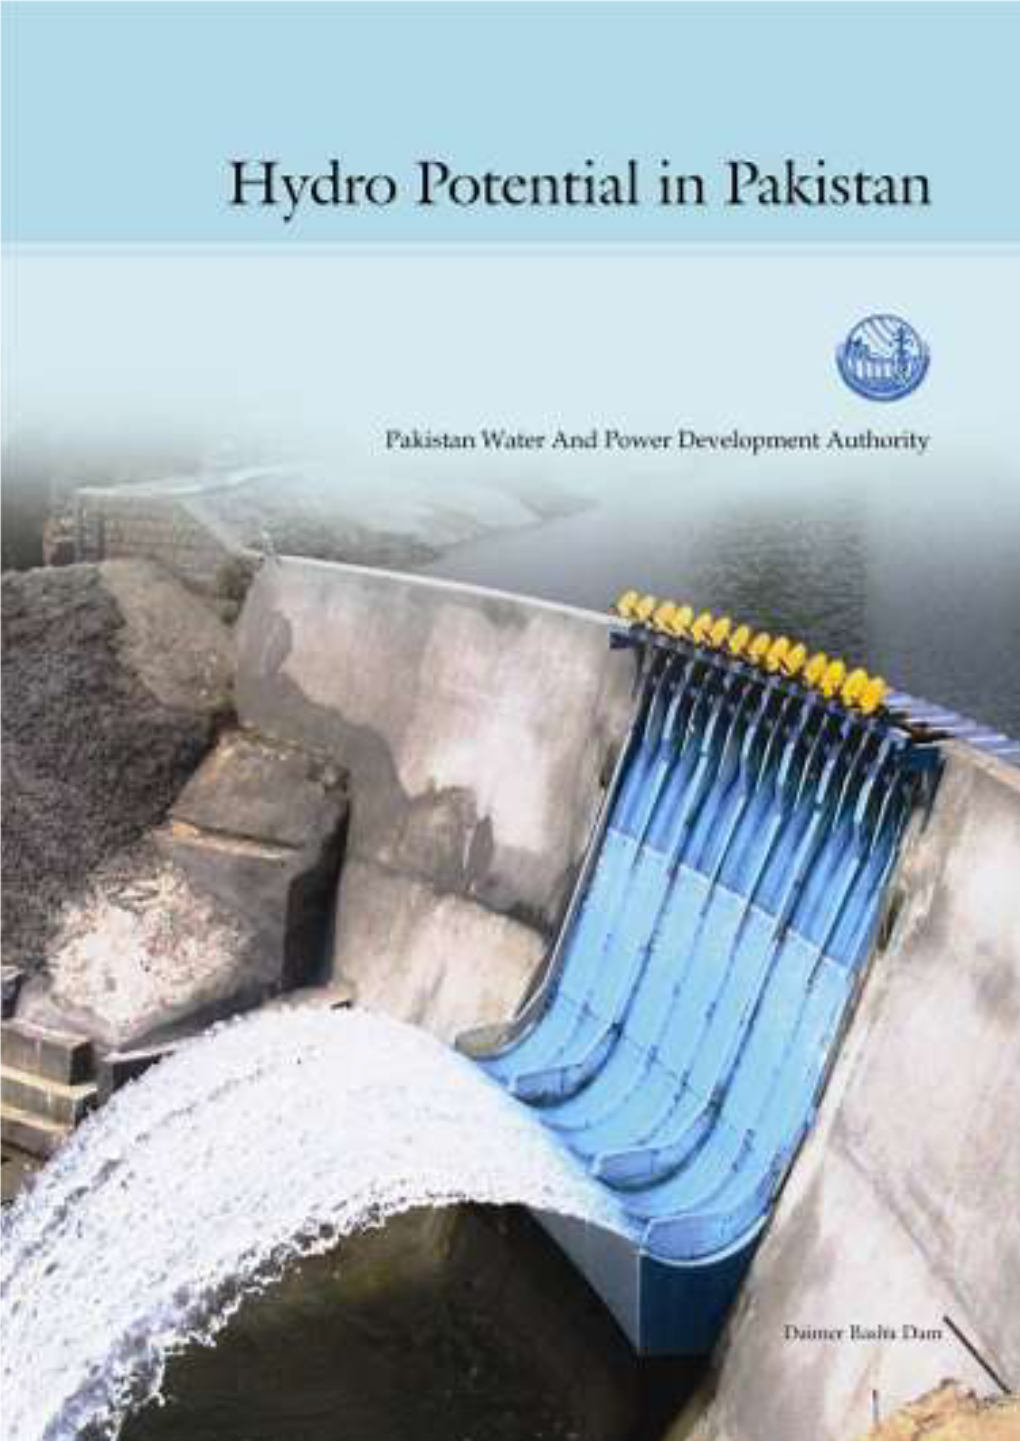 Kohala Hydropower Project